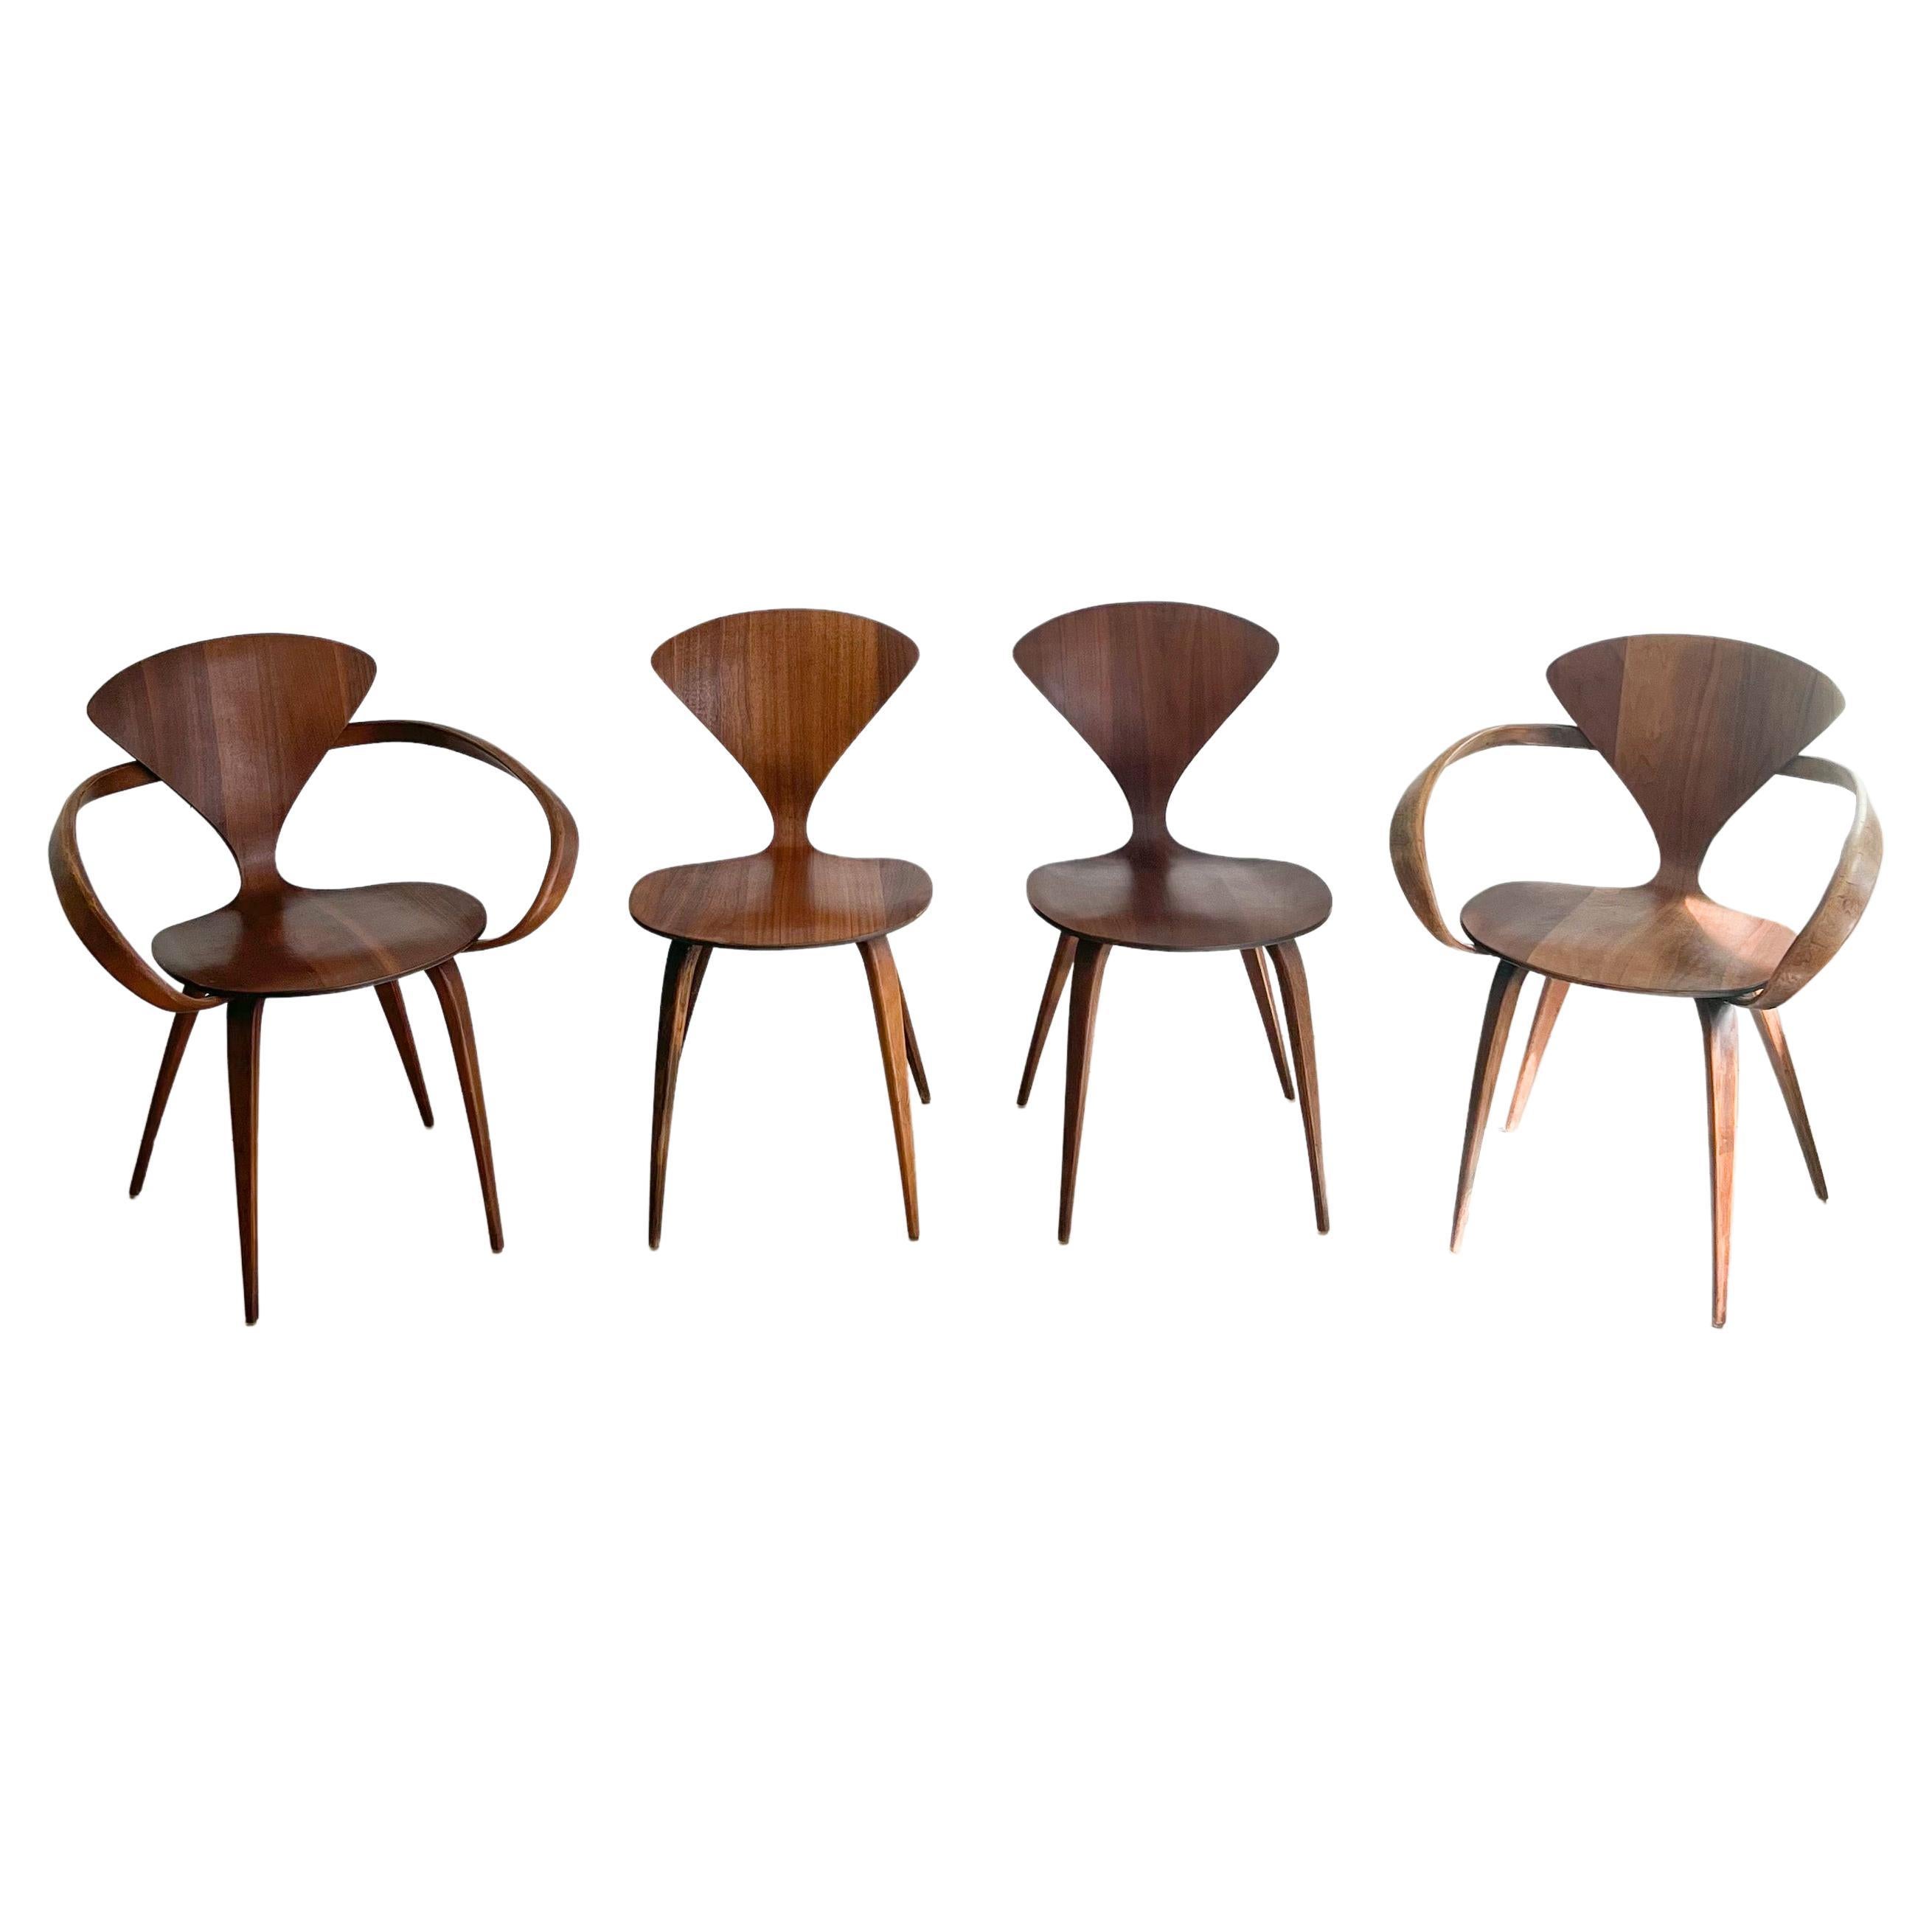 Set of 4 Norman Cherner Plycraft “Pretzel” Chairs